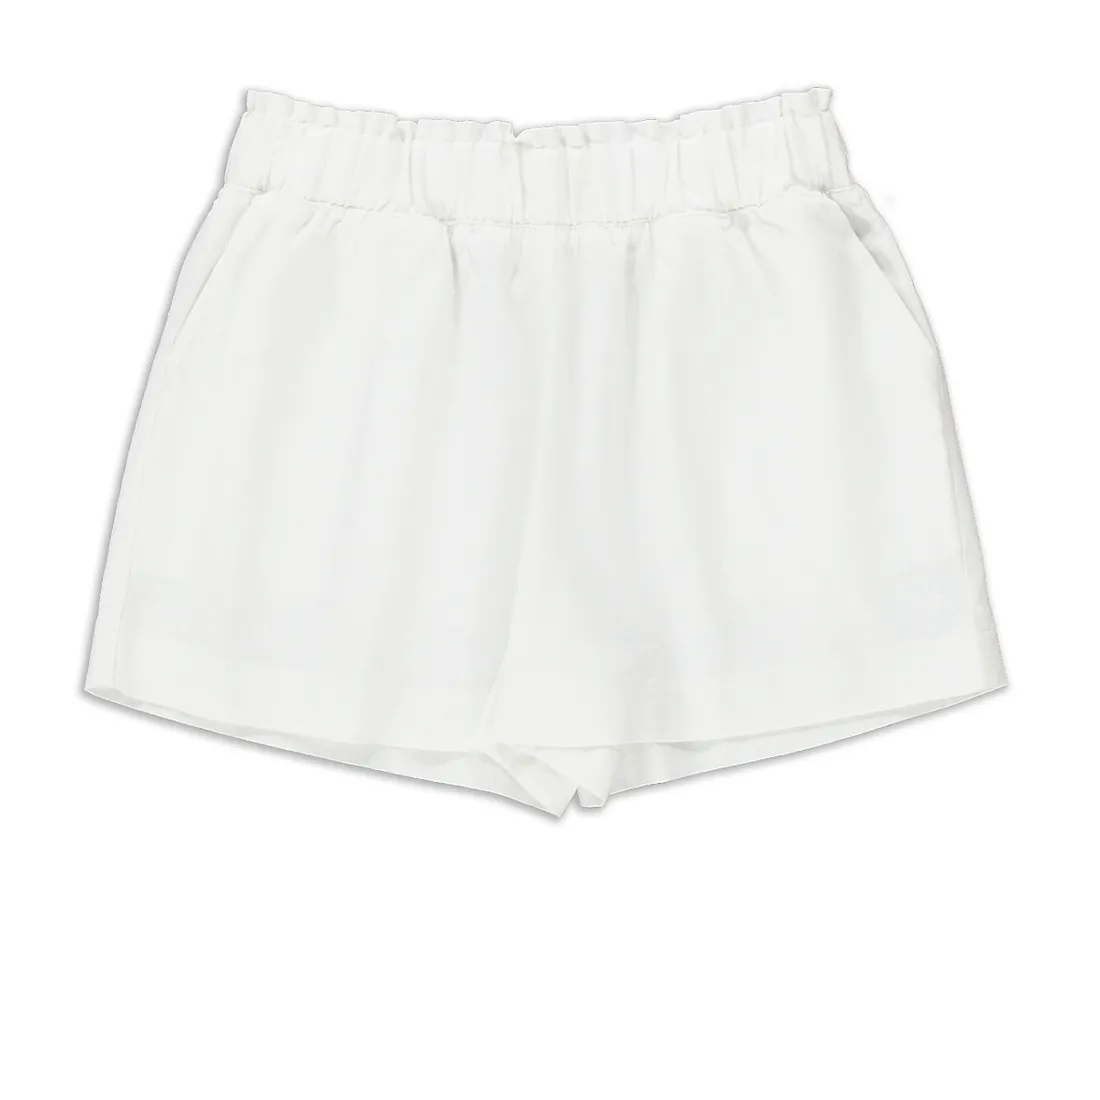 Shorts white - Kids's - Girls 7-15 years clothes | Ackermans